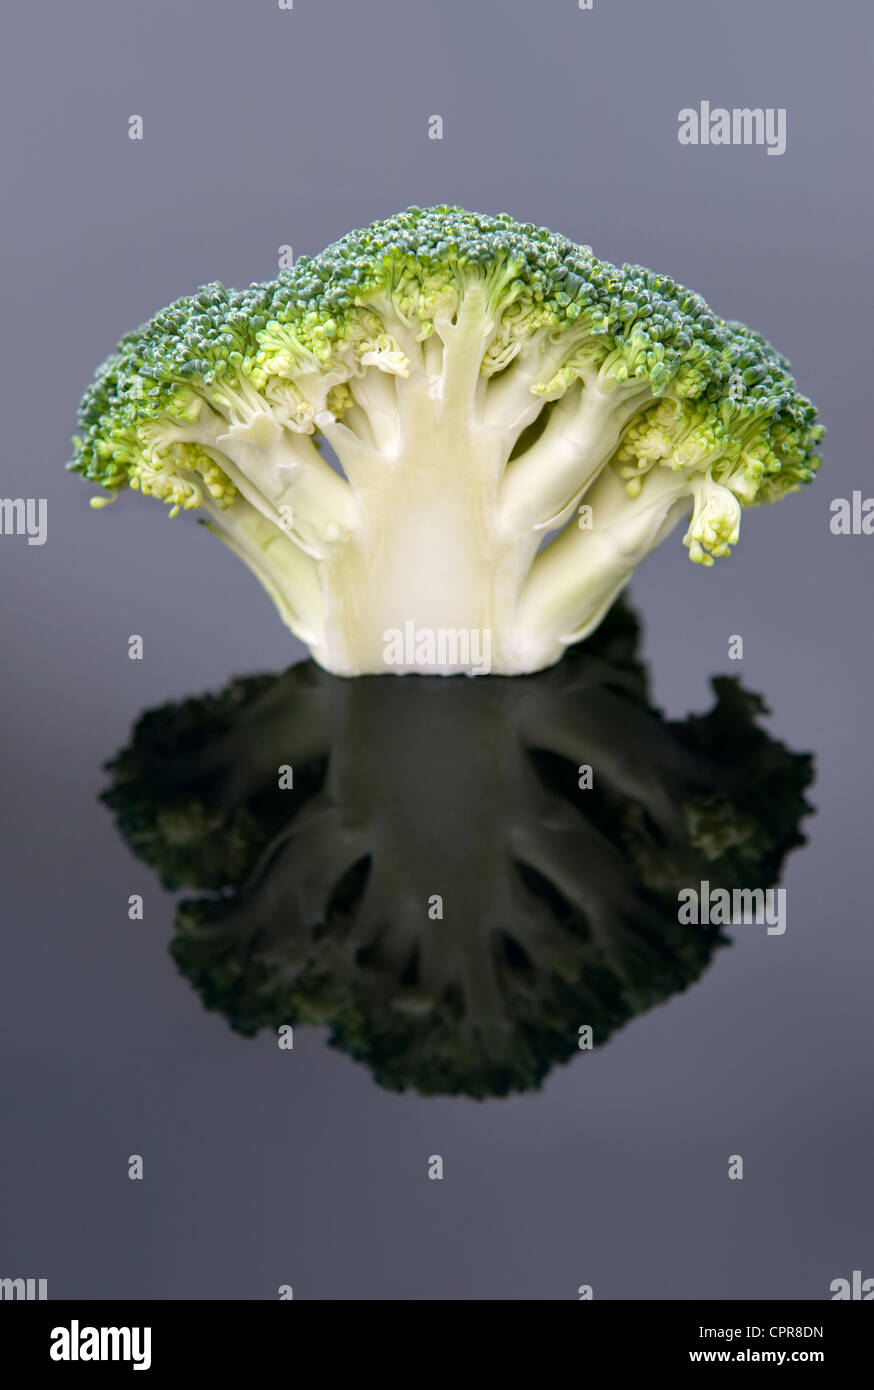 Studio image of fresh uncooked broccoli with reflection on black background Stock Photo